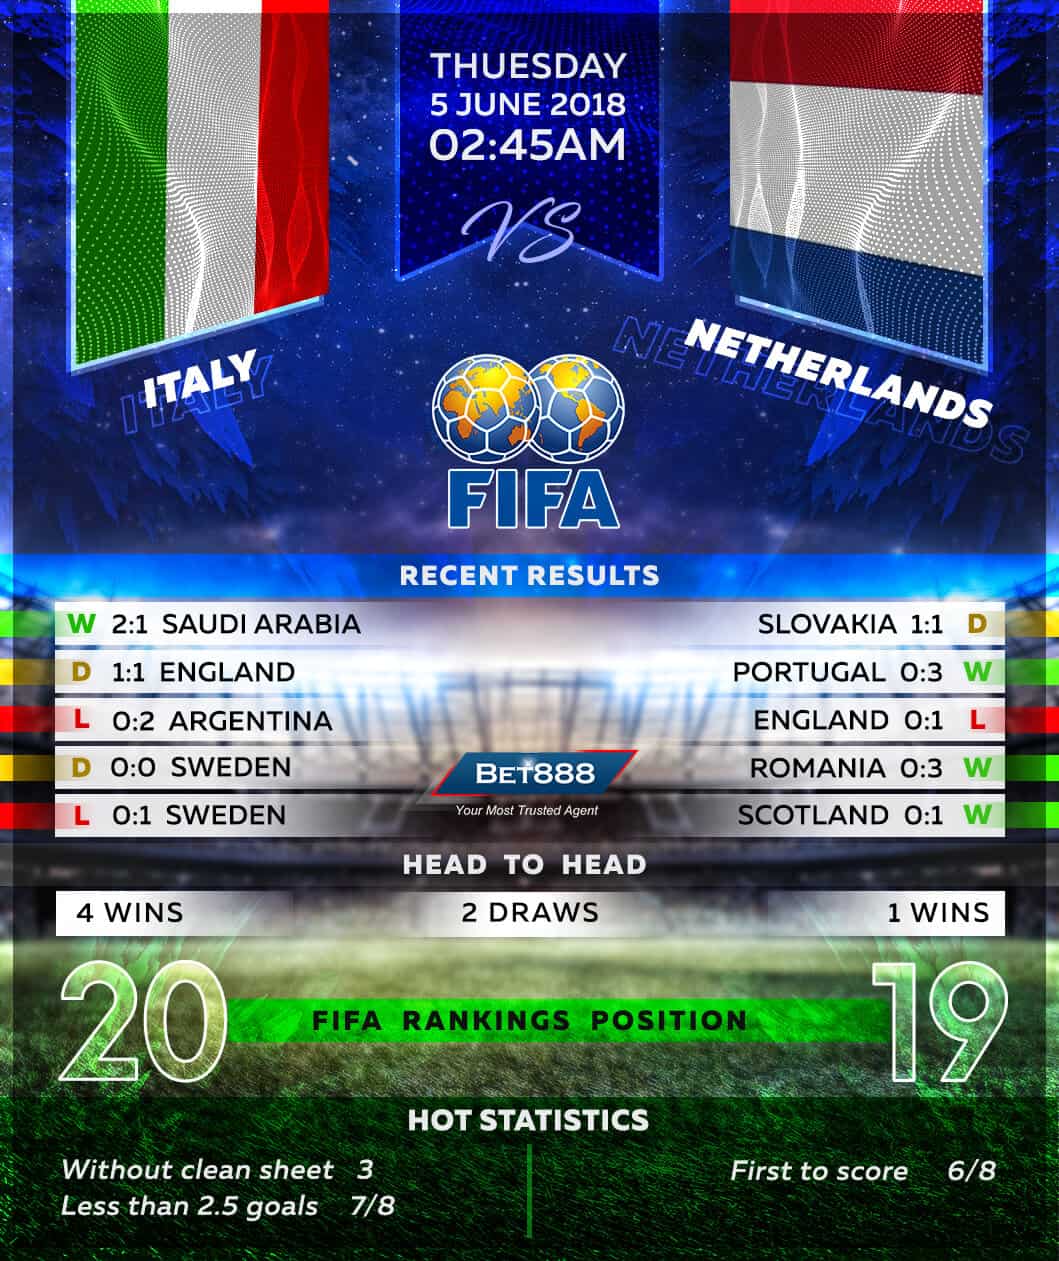 Italy vs Netherlands 05/06/18